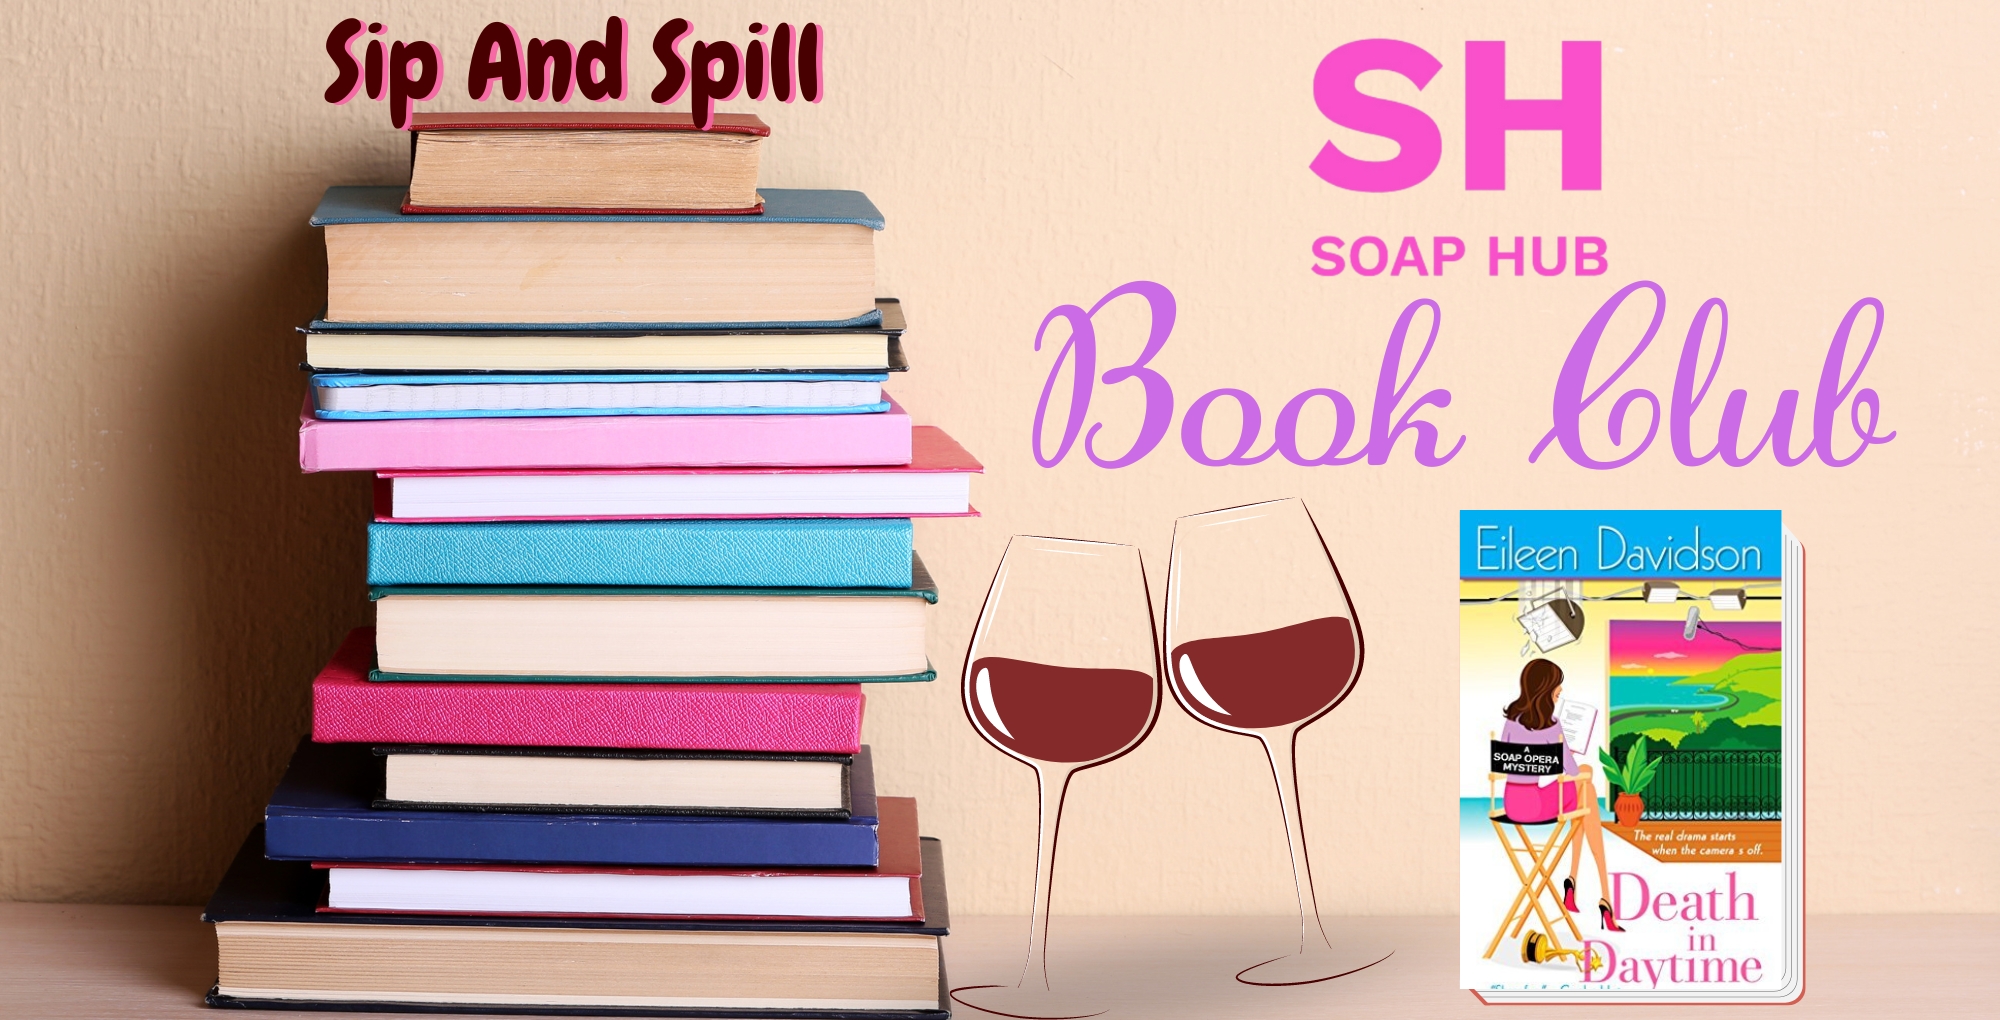 soap hub book club.